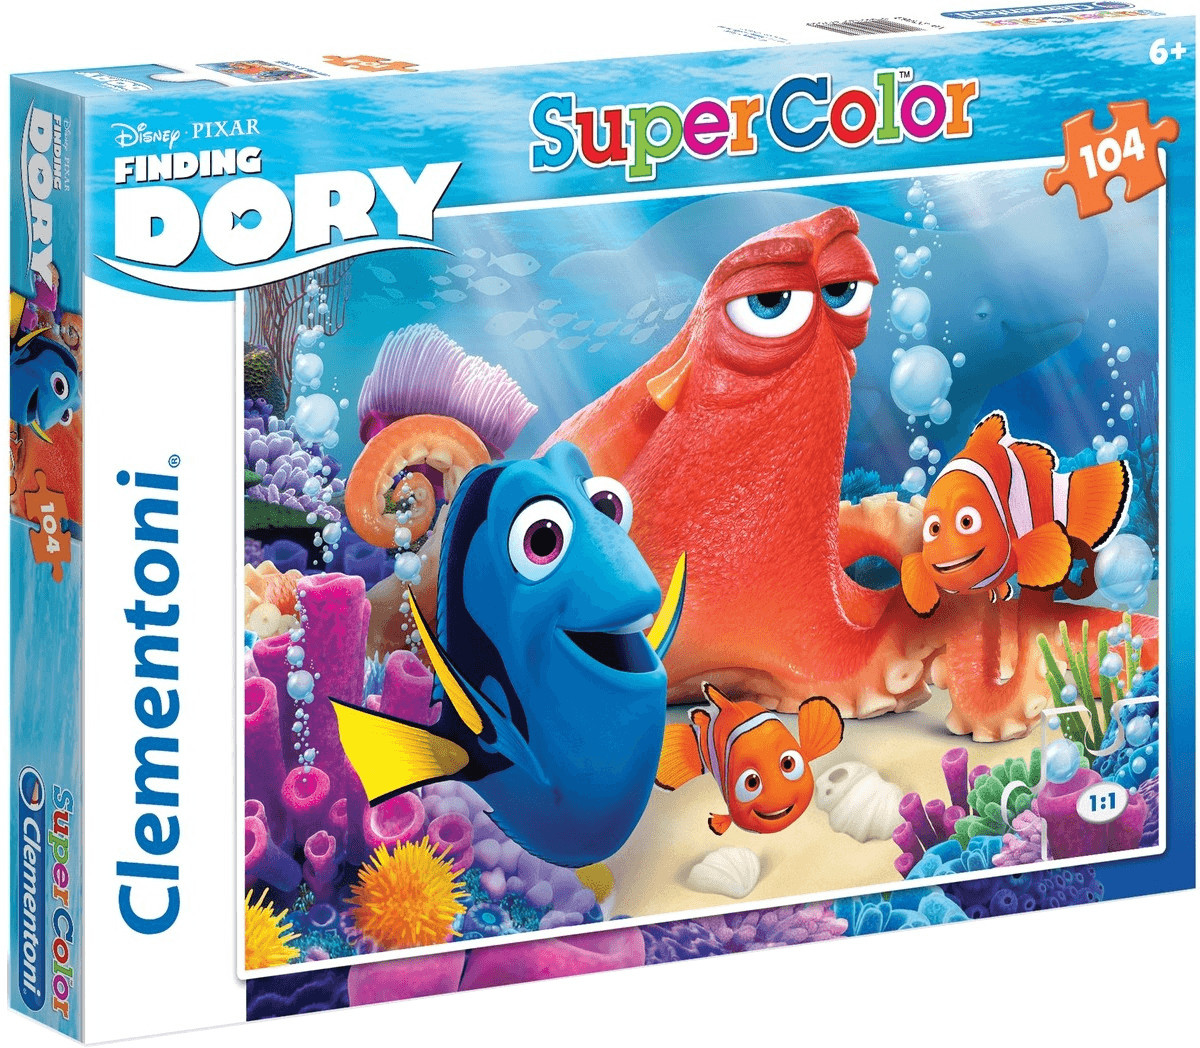 Clementoni Finding Dory - Friends make life colorful 104 pcs (27963)